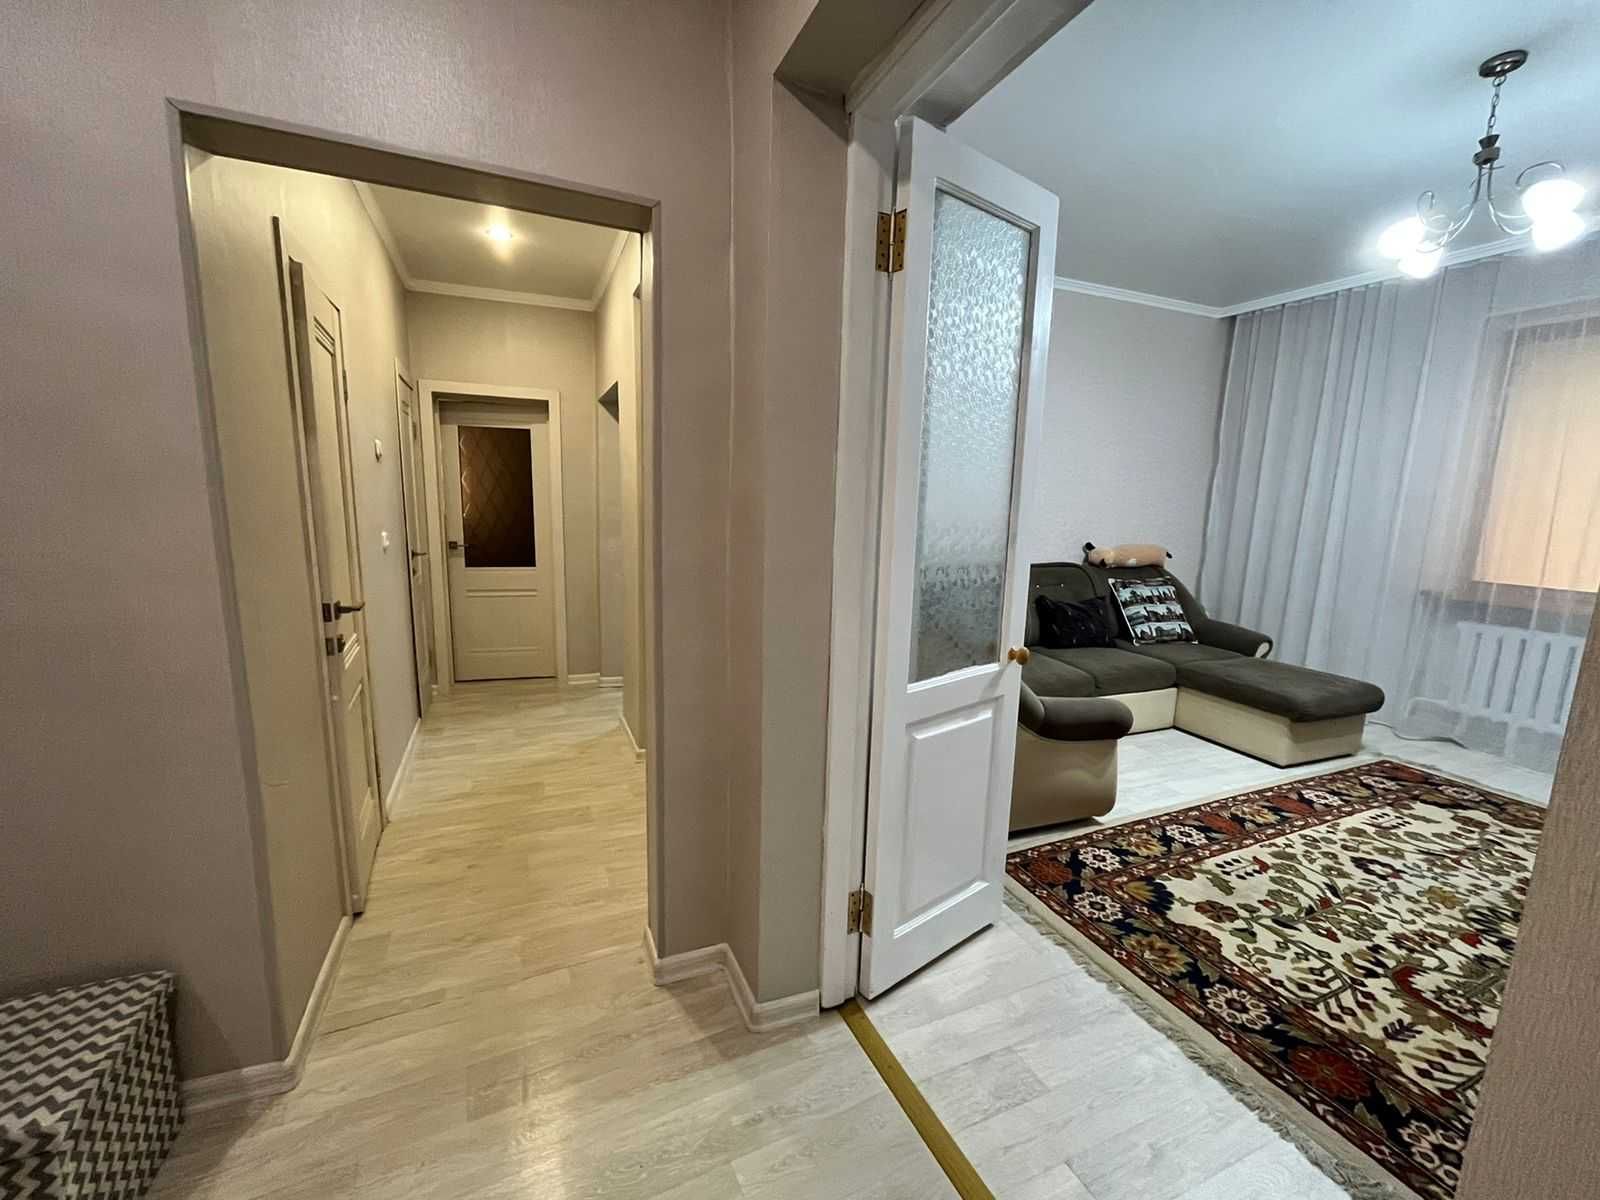 Продается 2-х комн. квартира в городе по ул. Чижевского